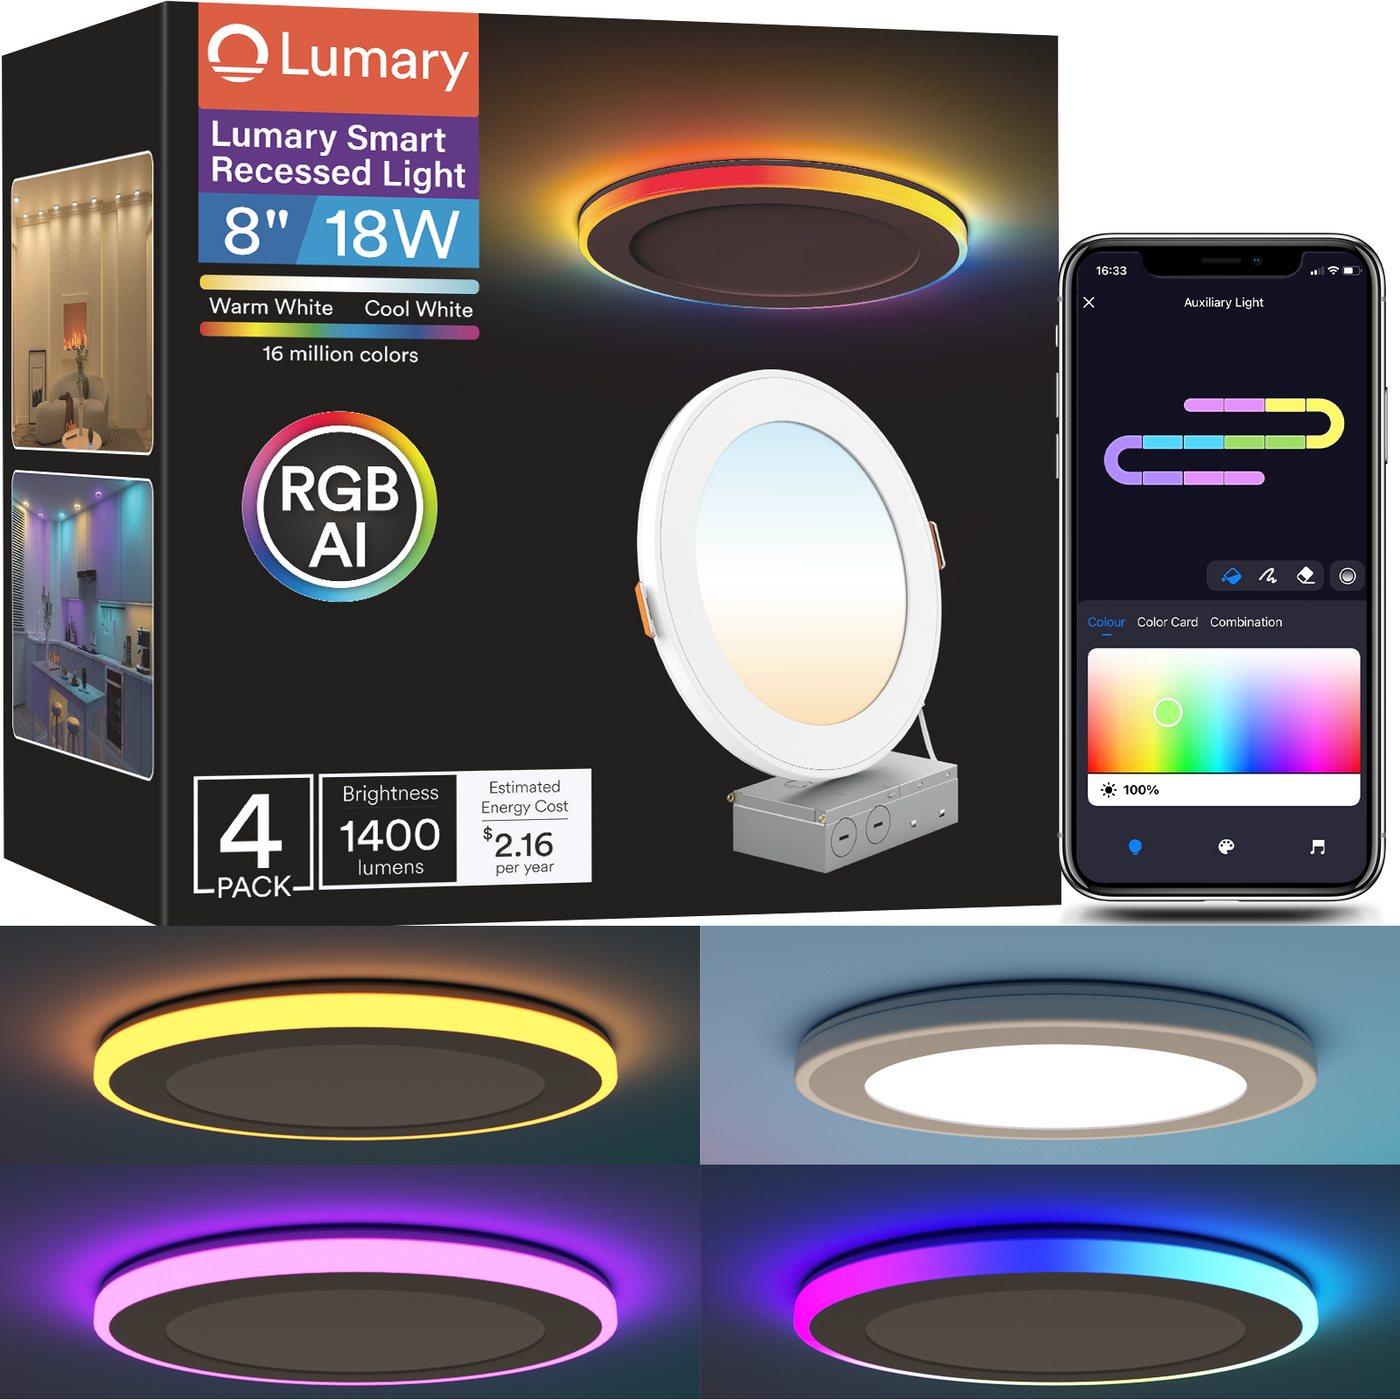 Lumary Smart RGBAI Recessed Light with Gradient Auxiliary Night Light